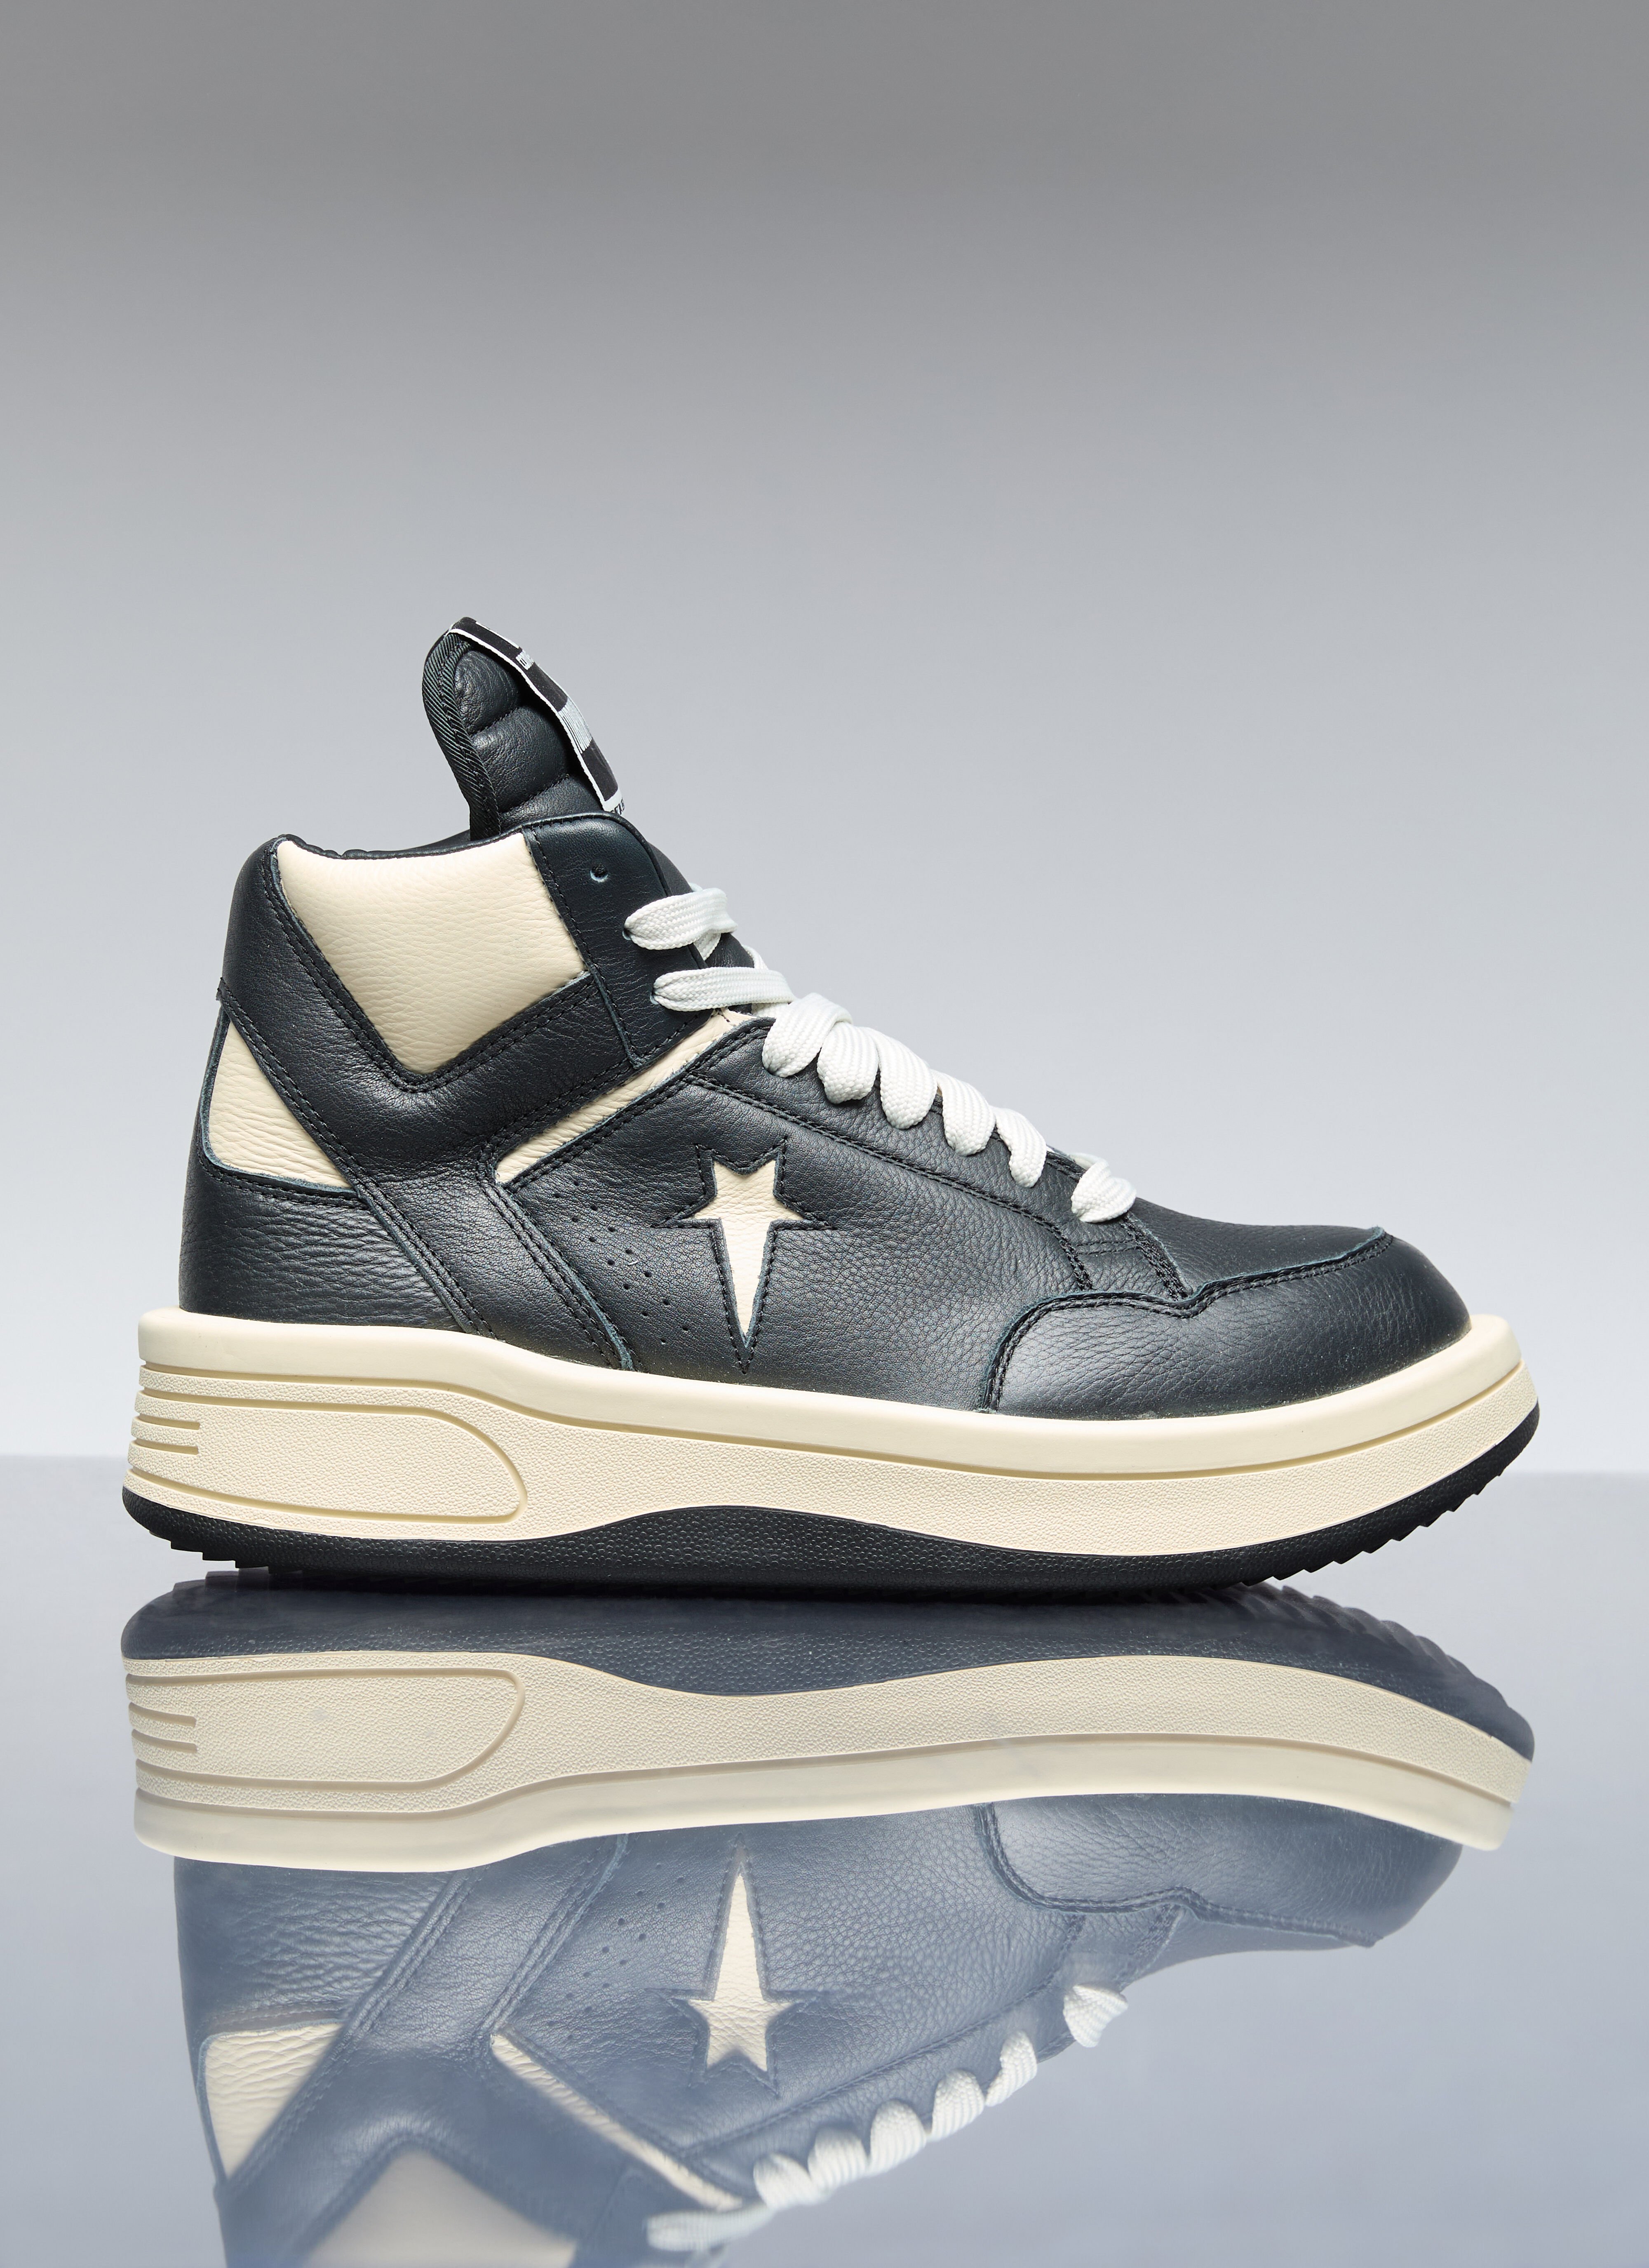 New Balance Turbowpn Sneakers Black new0156021